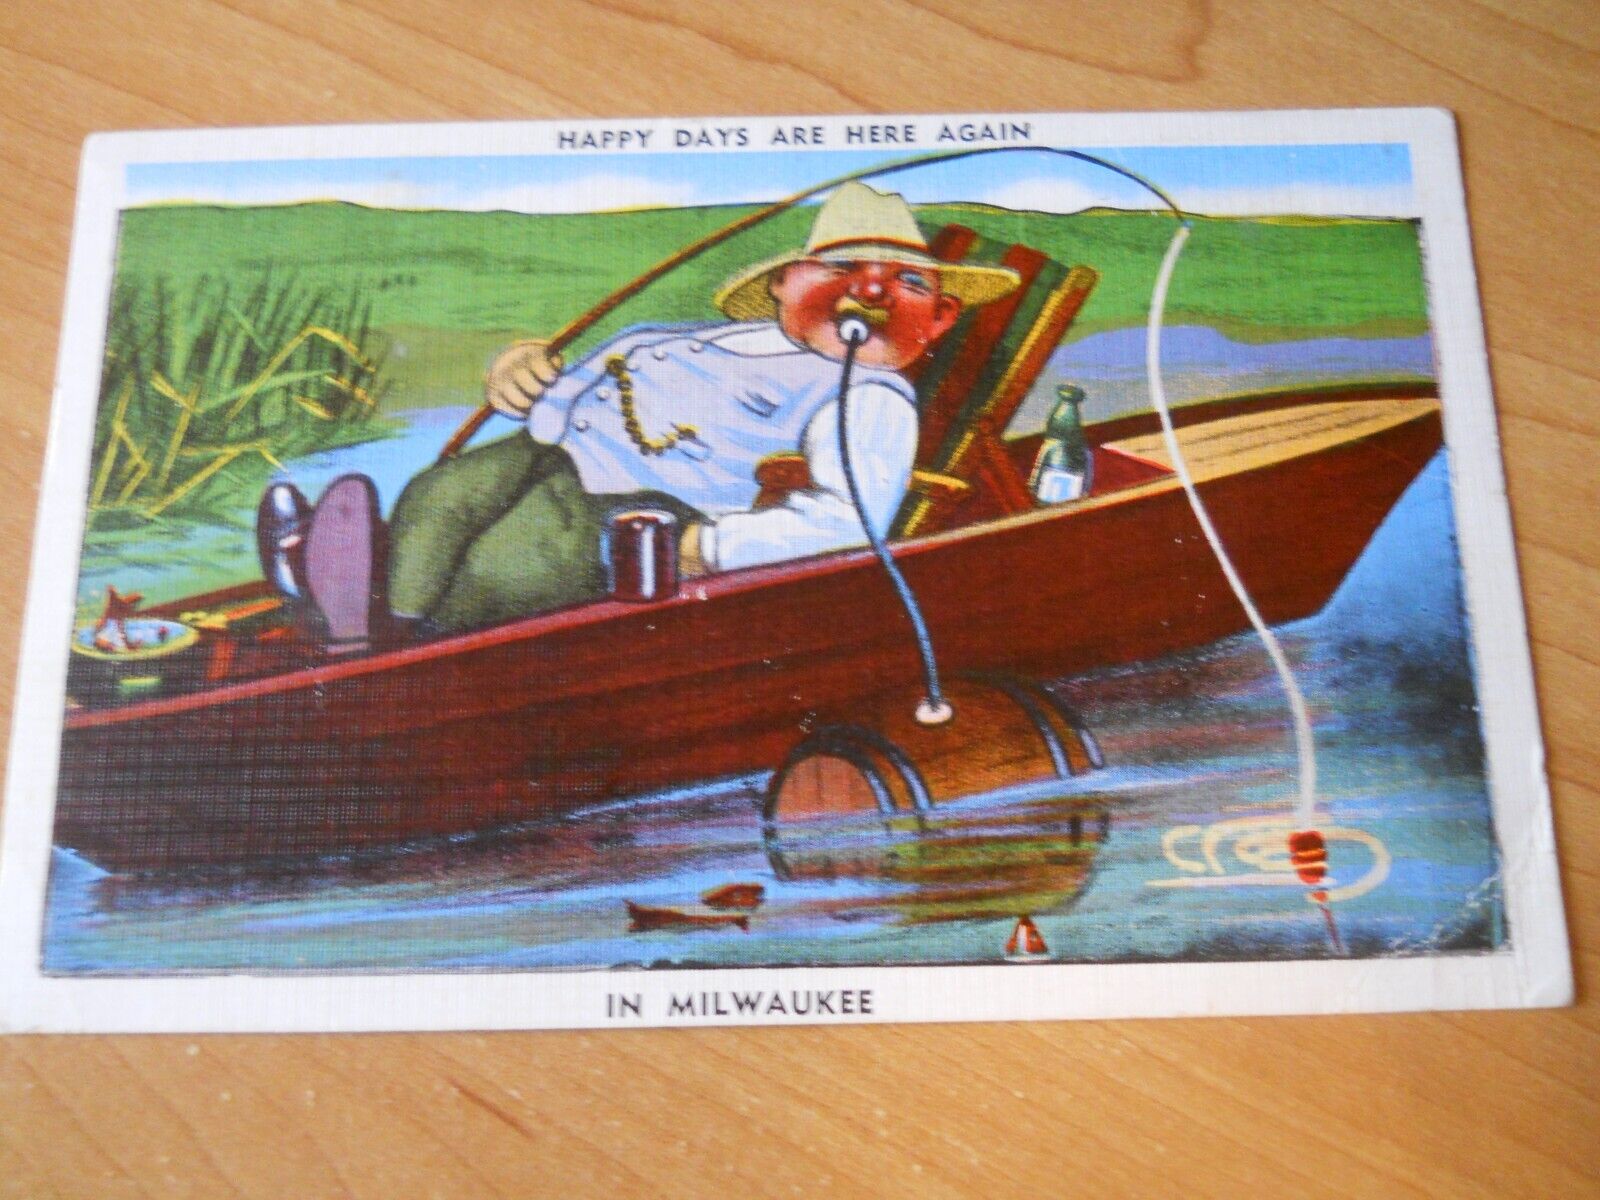 VINTAGE 1945 POSTCARD HAPPY DAYS MILWAUKEE DRINKING FISHERMAN IN BOAT FREE STAMP